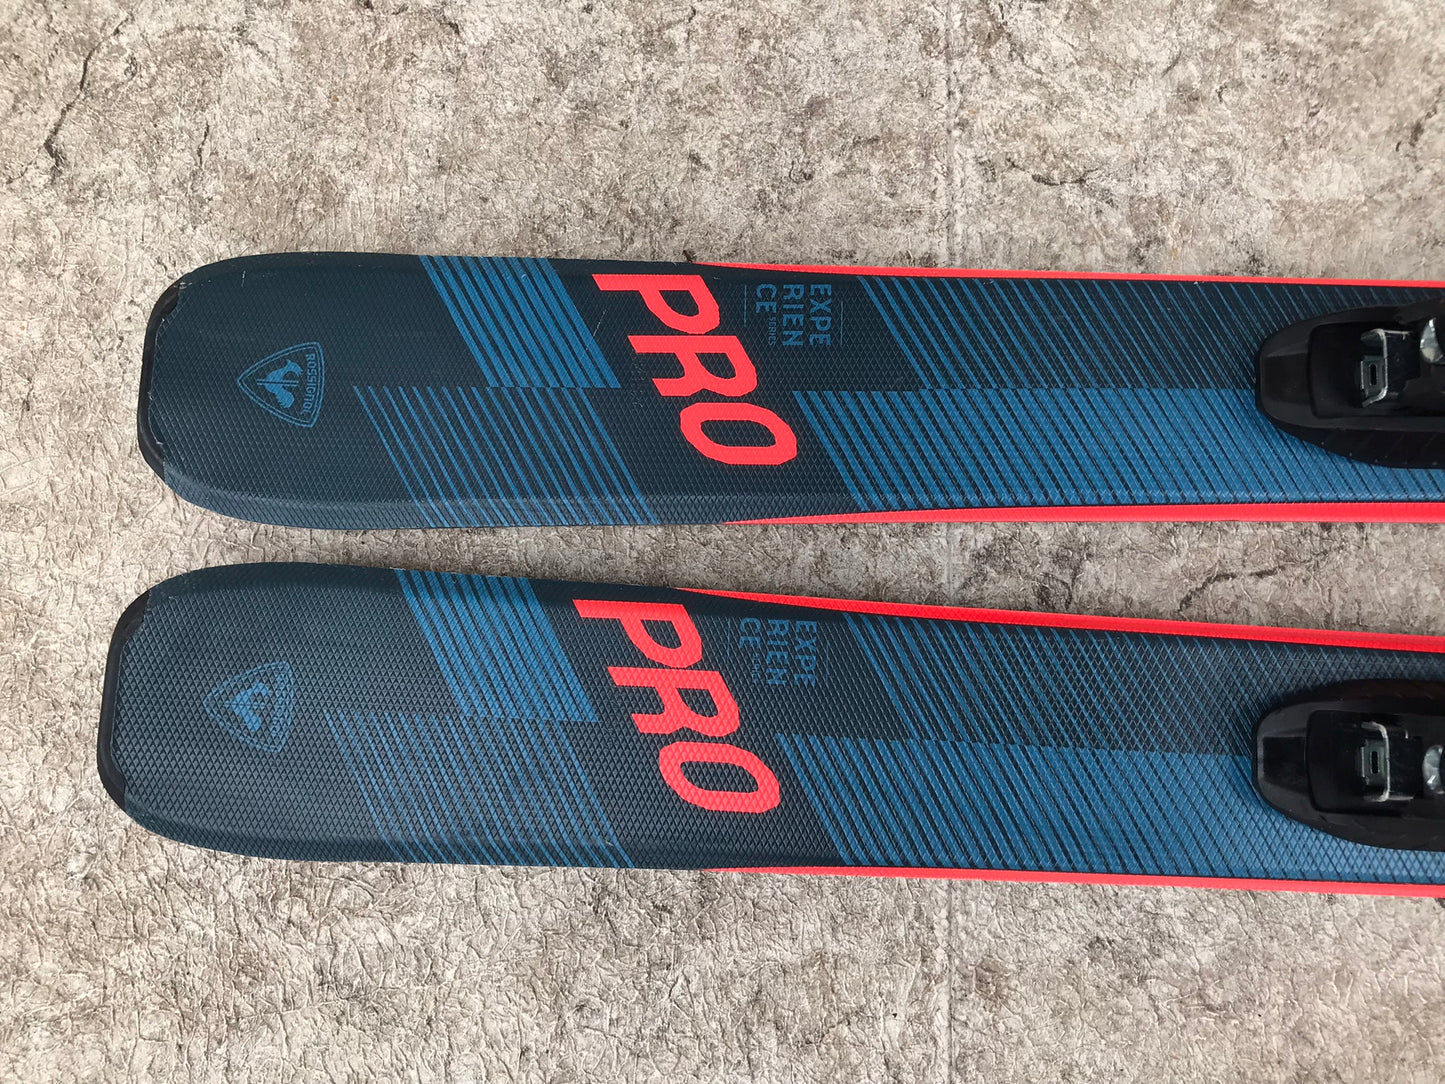 Ski 140 Rossignol Pro Parabolic Blue Orange With Bindings Excellent